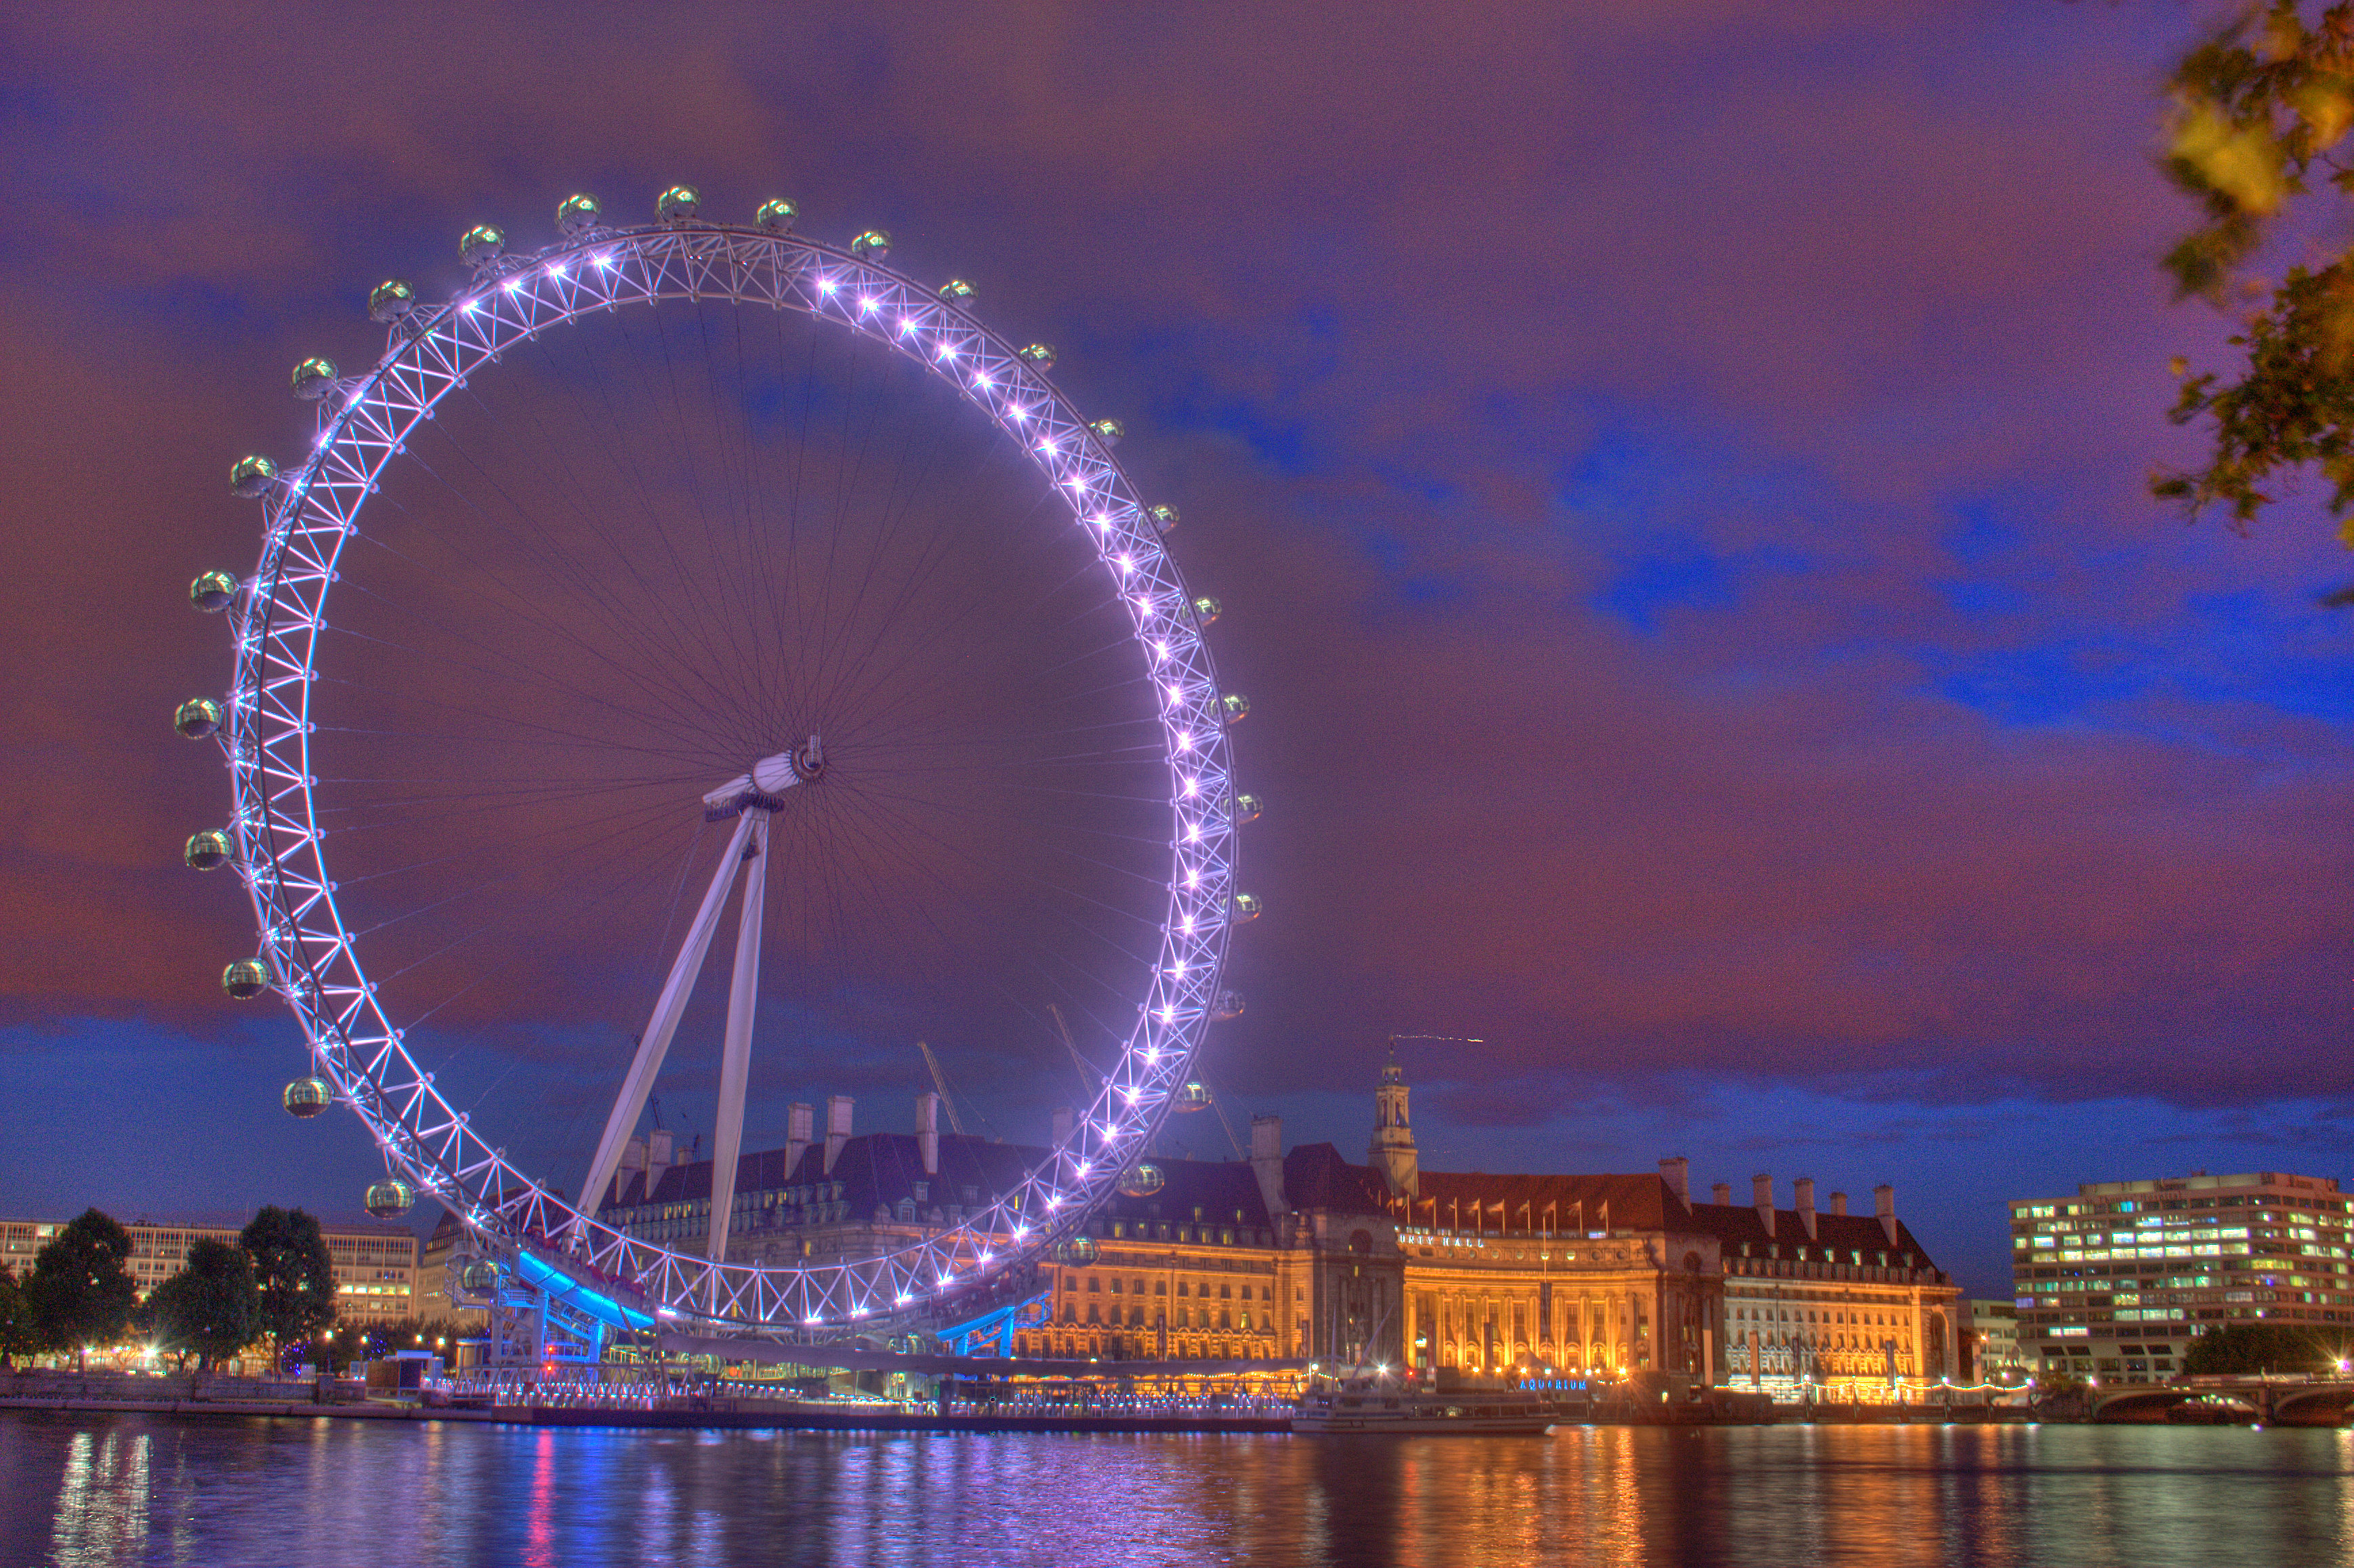 London eye | Flickr - Photo Sharing!